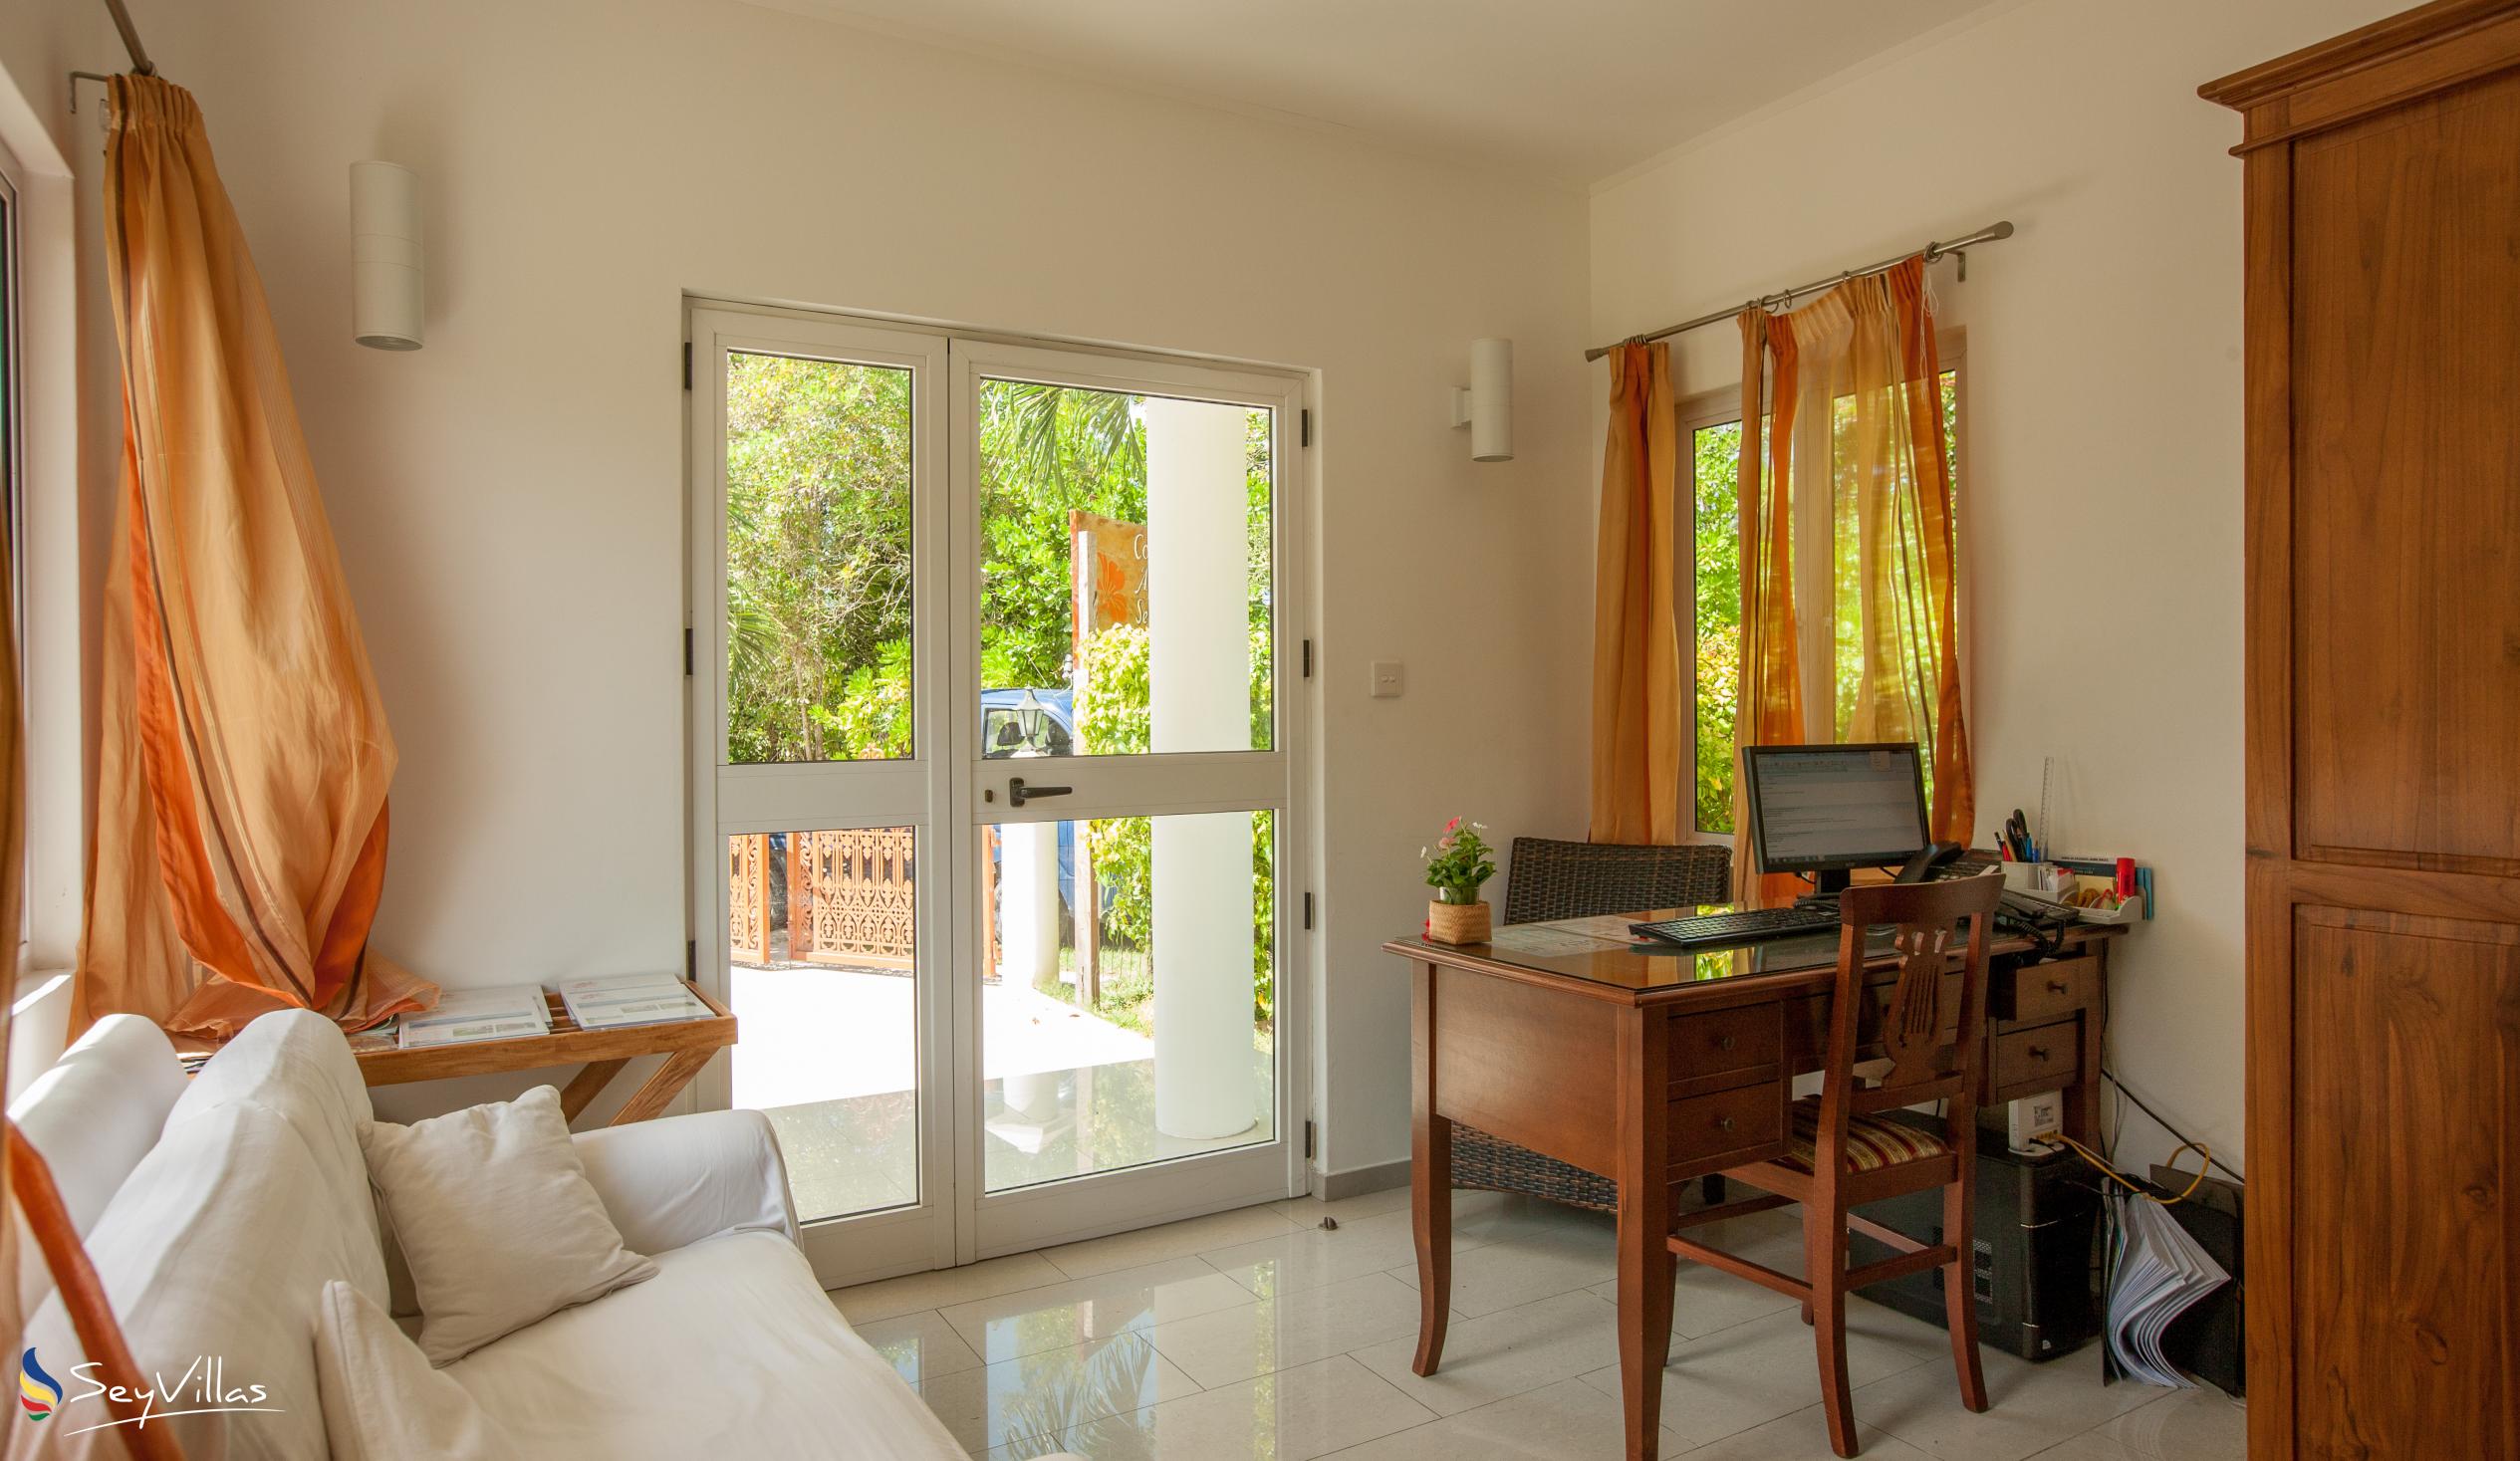 Foto 7: Cote d'Or Apartments - Interno - Praslin (Seychelles)